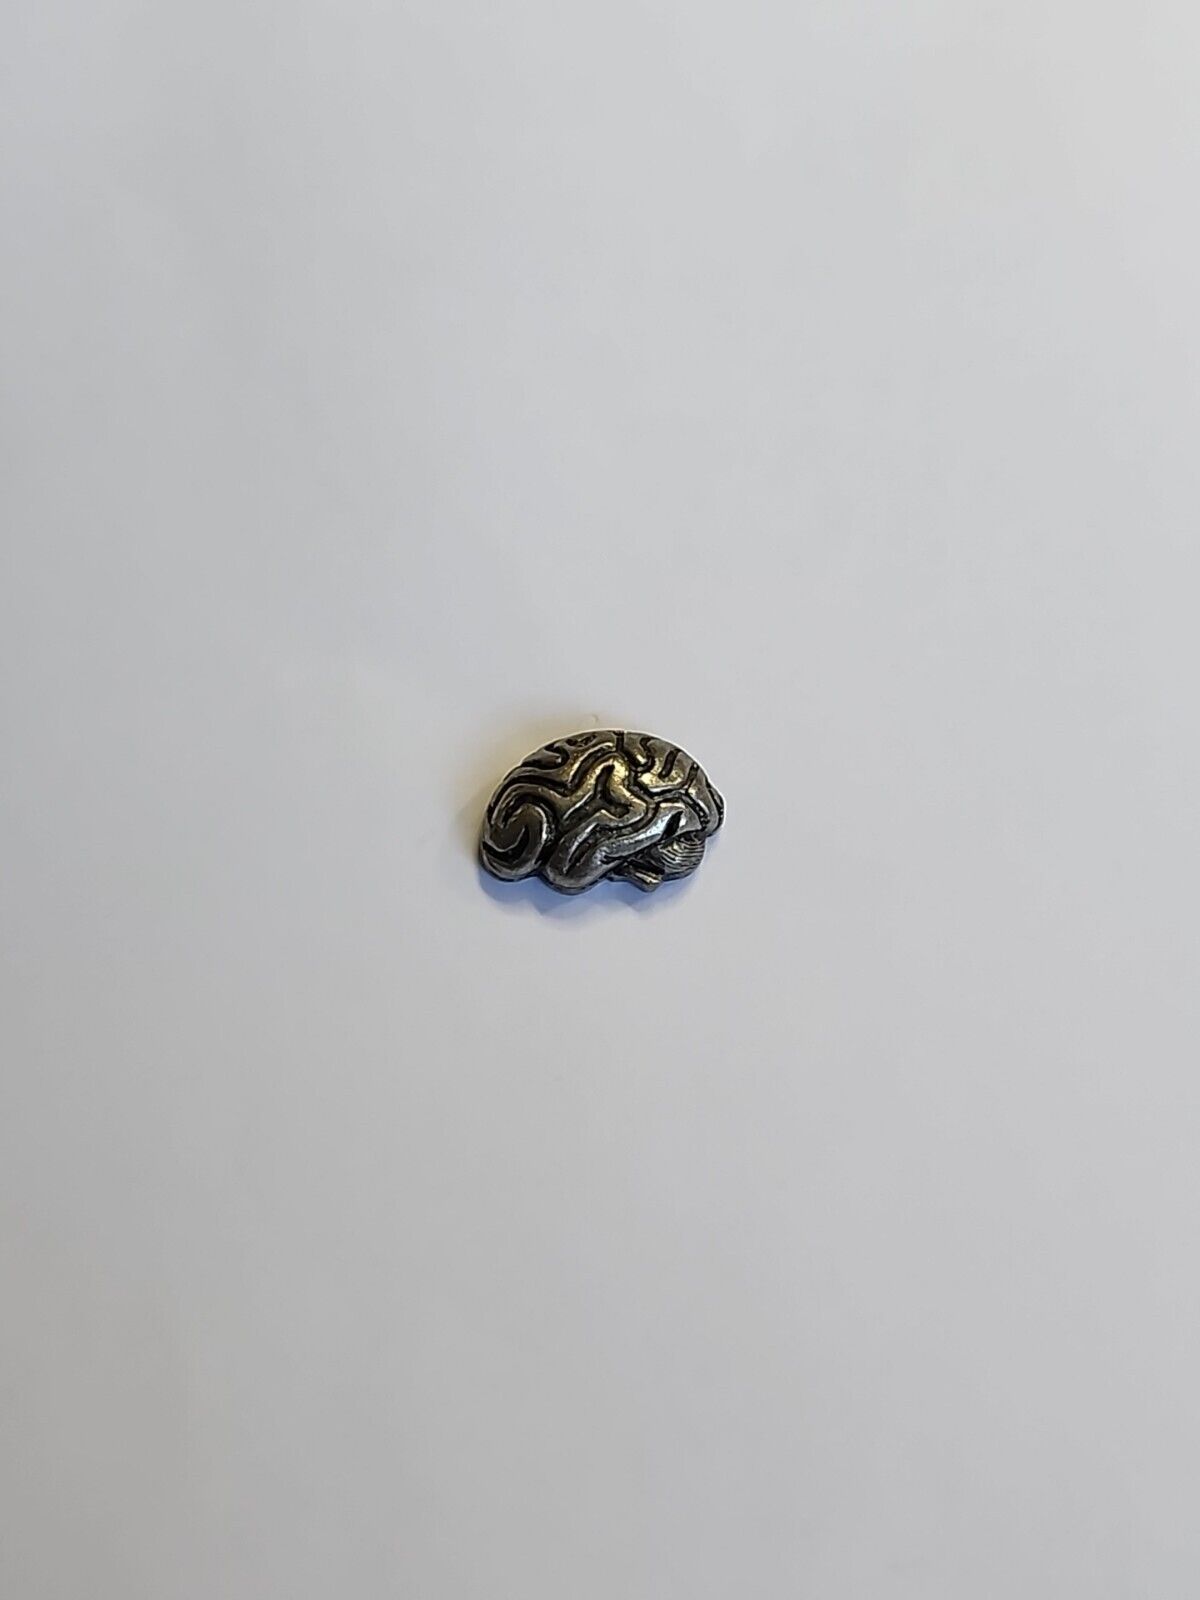 Human Brain Lapel Pin Pewter Small Size